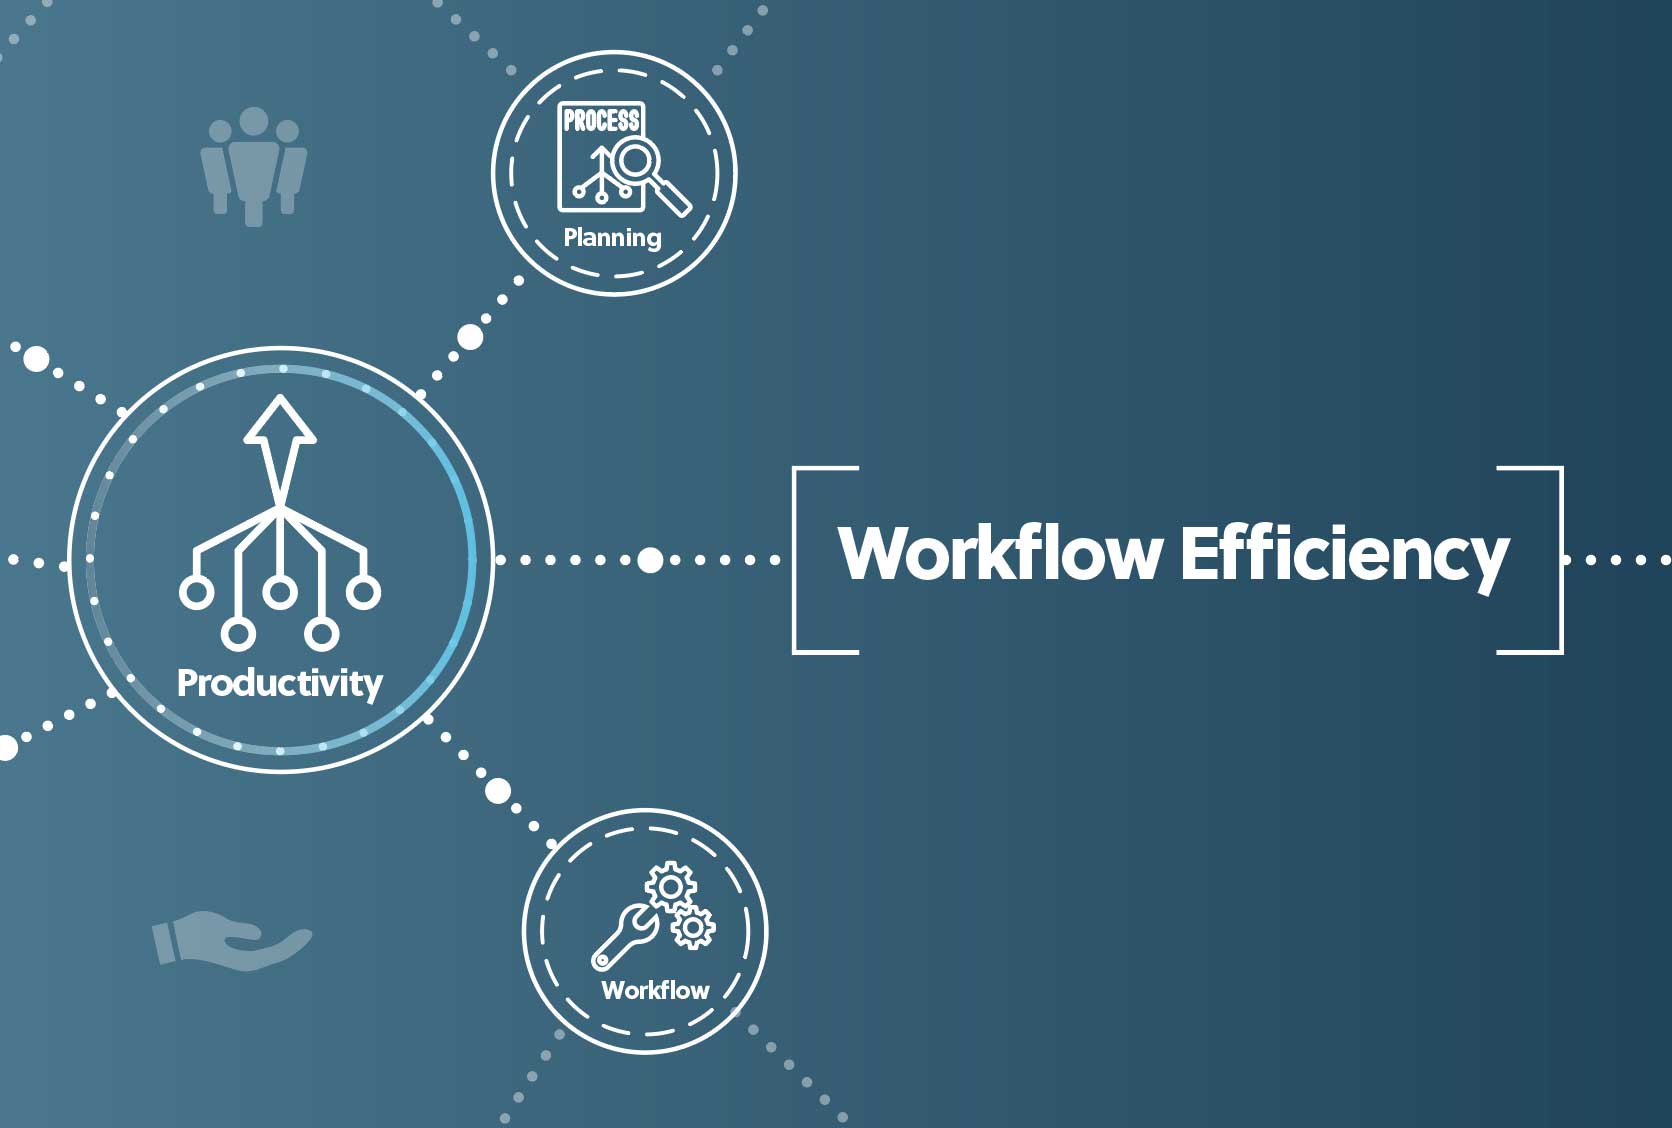 regulatory compliance as part of workflow efficiency